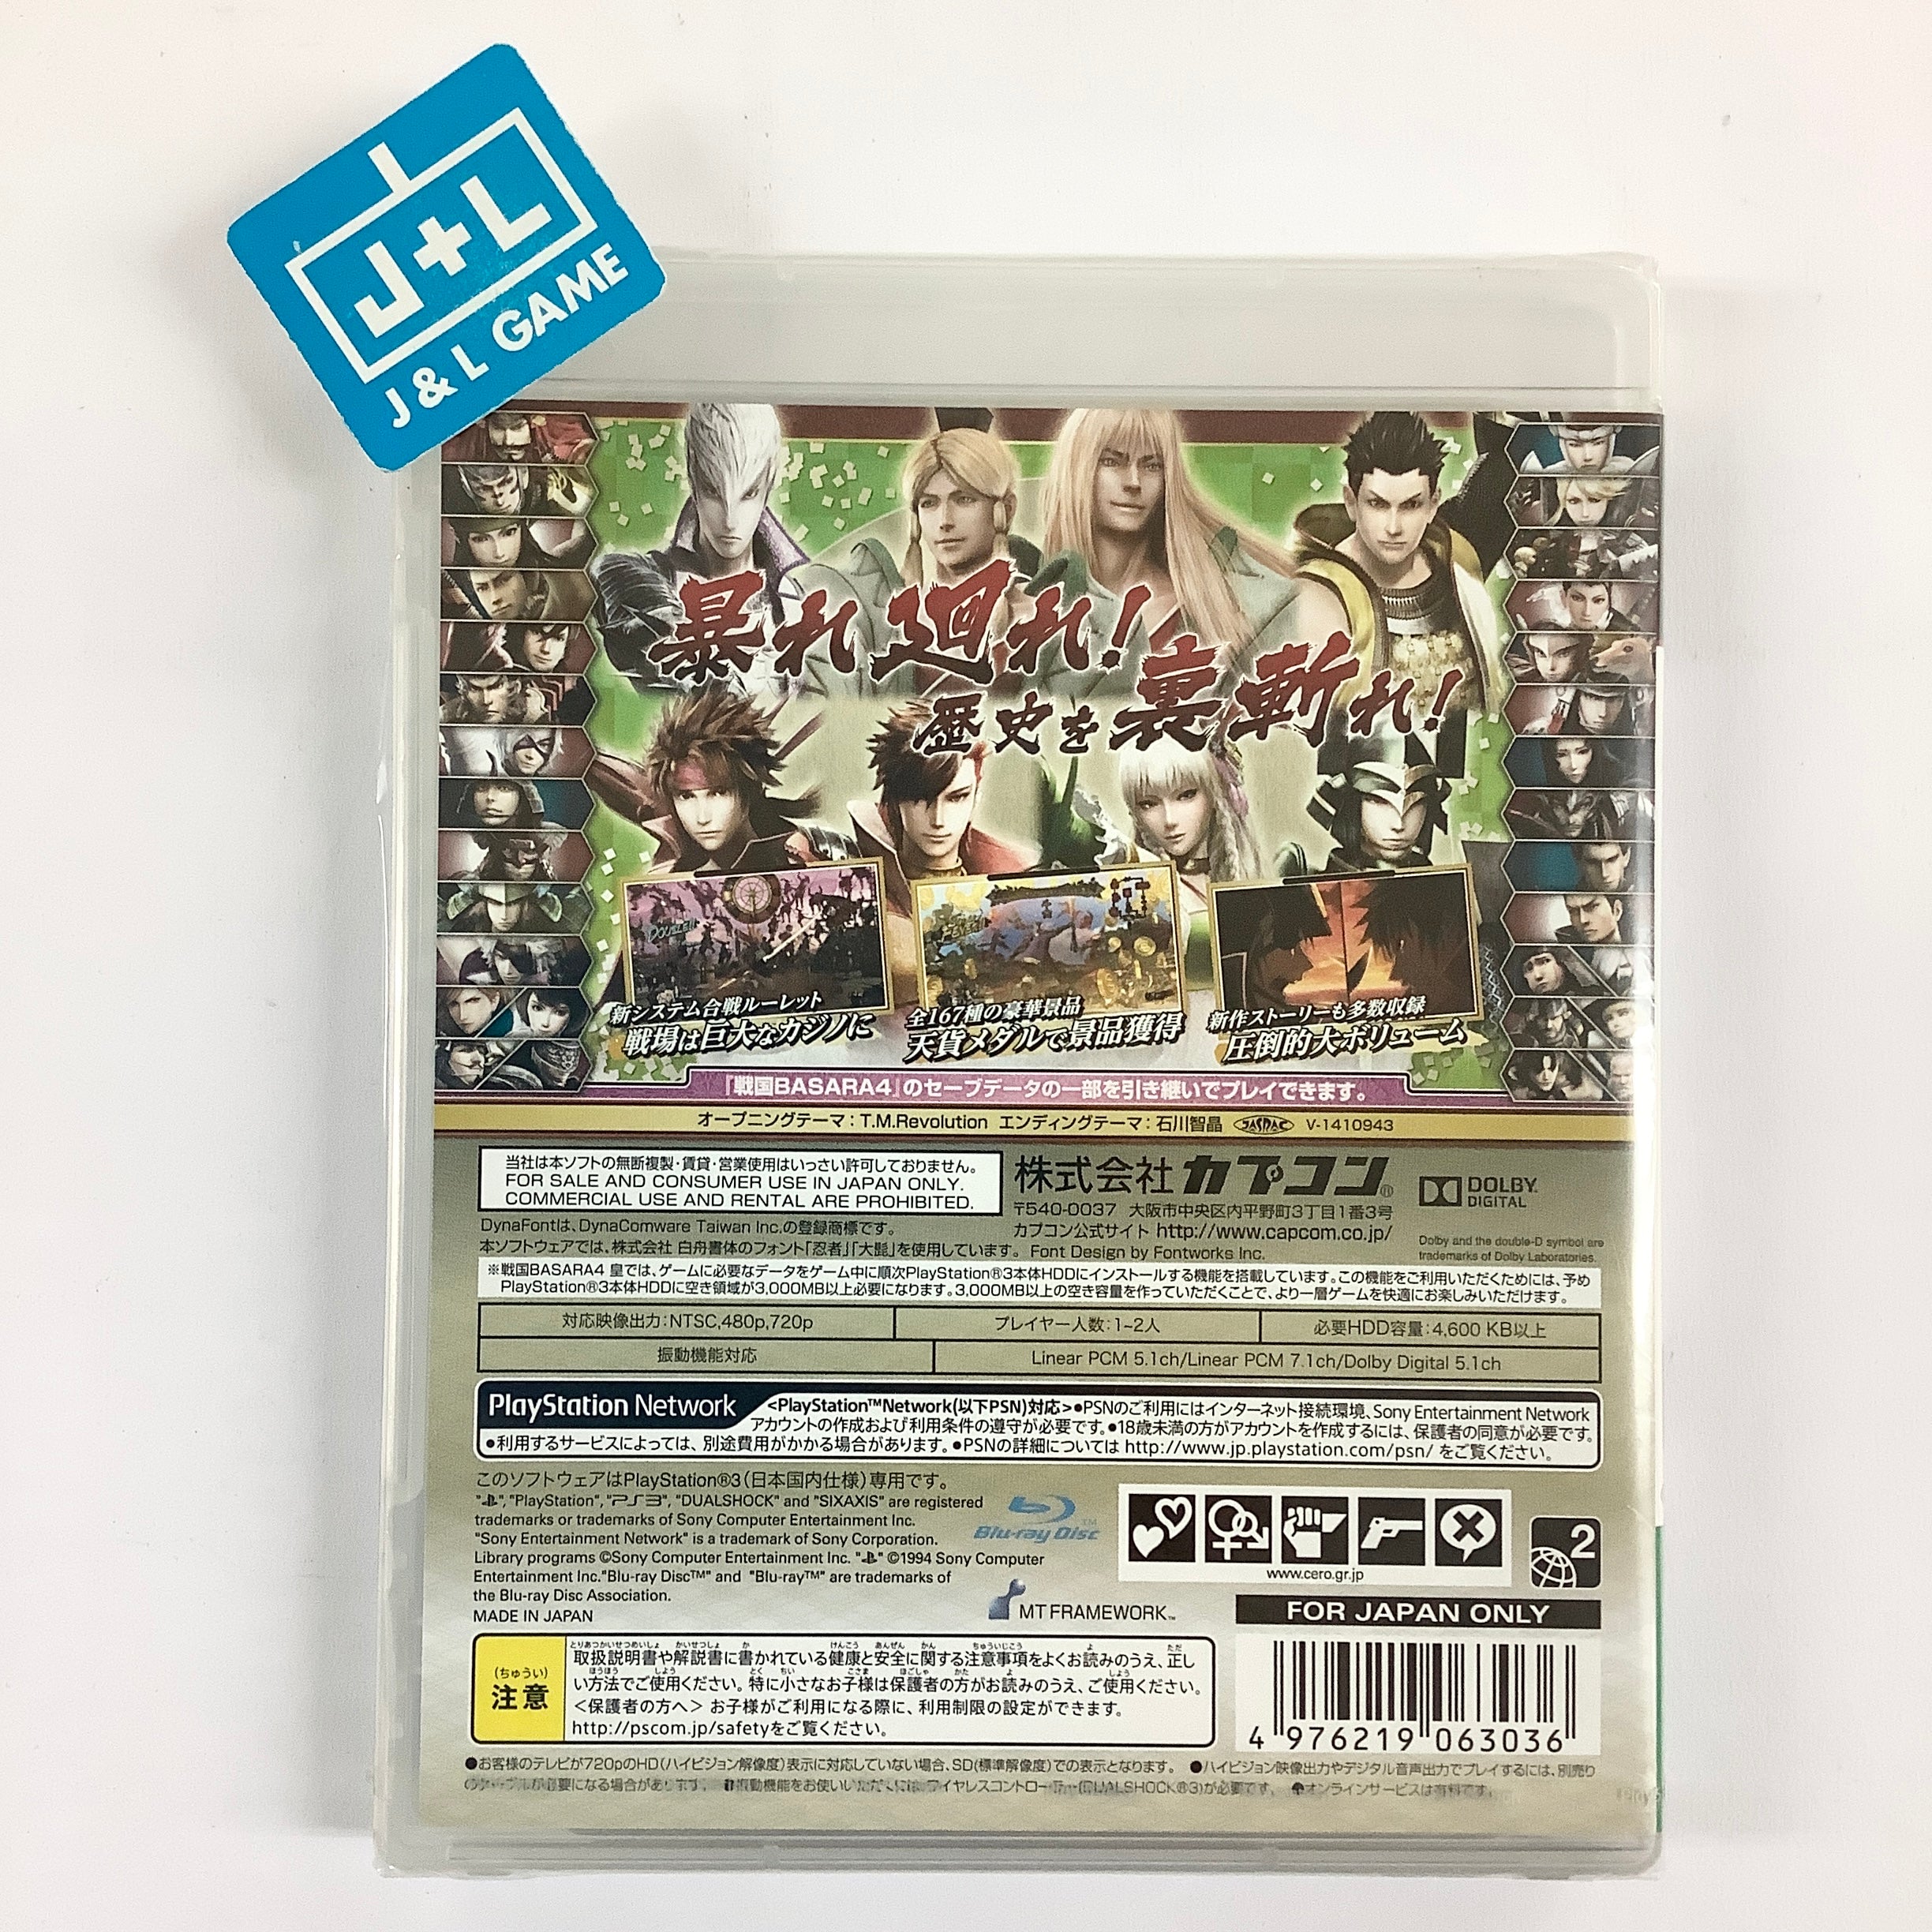 Sengoku Basara 4: Sumeragi - (PS3) PlayStation 3 (Japanese Import) Video Games Capcom   